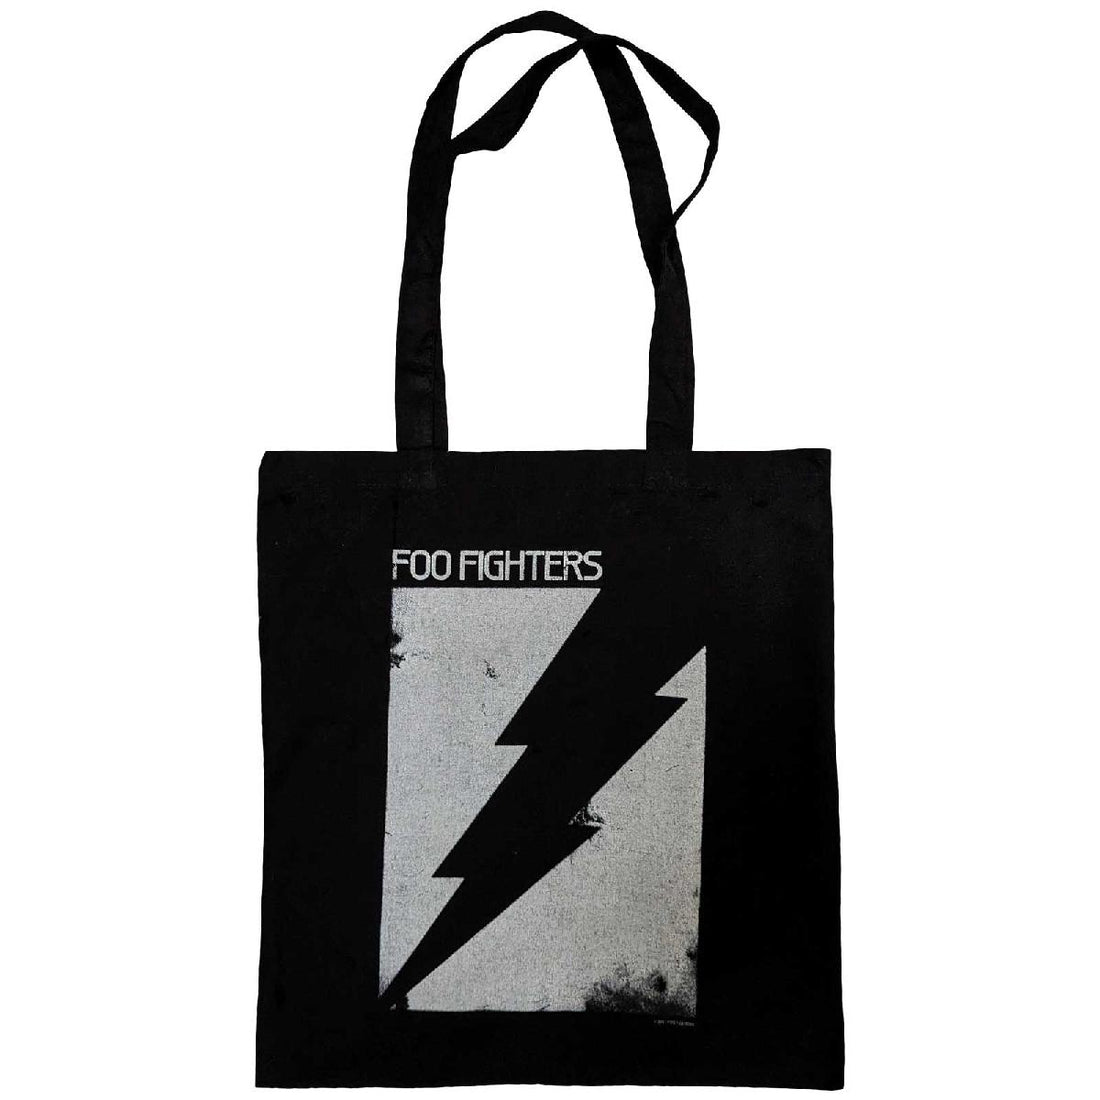 Foo Fighters Tote Bag: Lightning